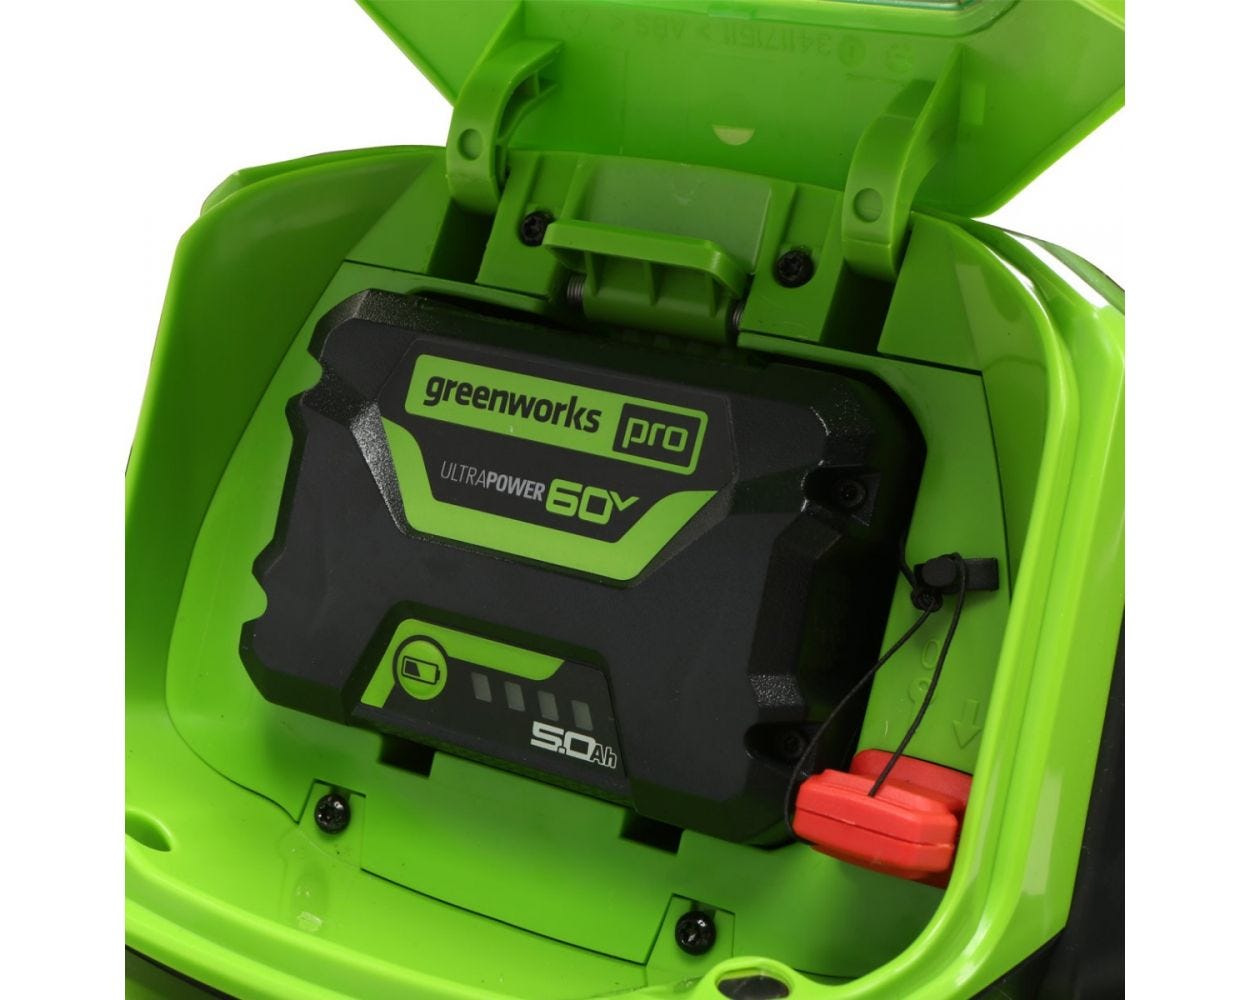 60V Brushless 19-Inch Lawn Mower | Greenworks Pro